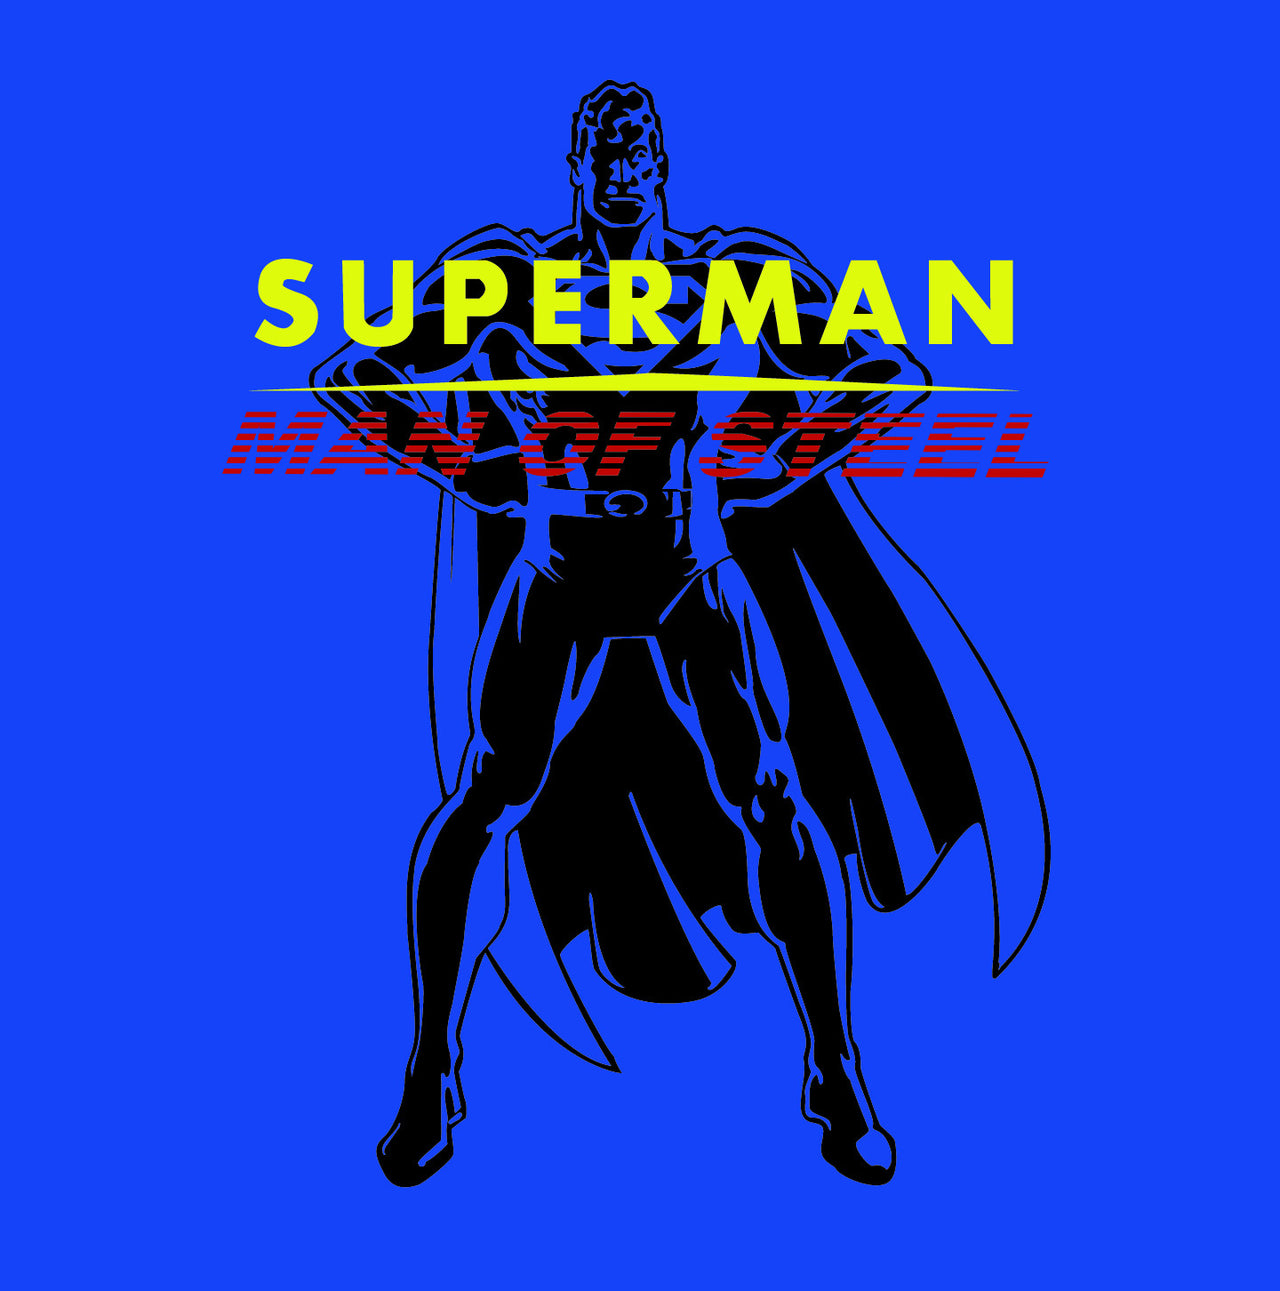 Superman Man Of Steel Standing Figure Logo on Blue Fitted Sheer Tank Top for Women - TshirtNow.net - 2